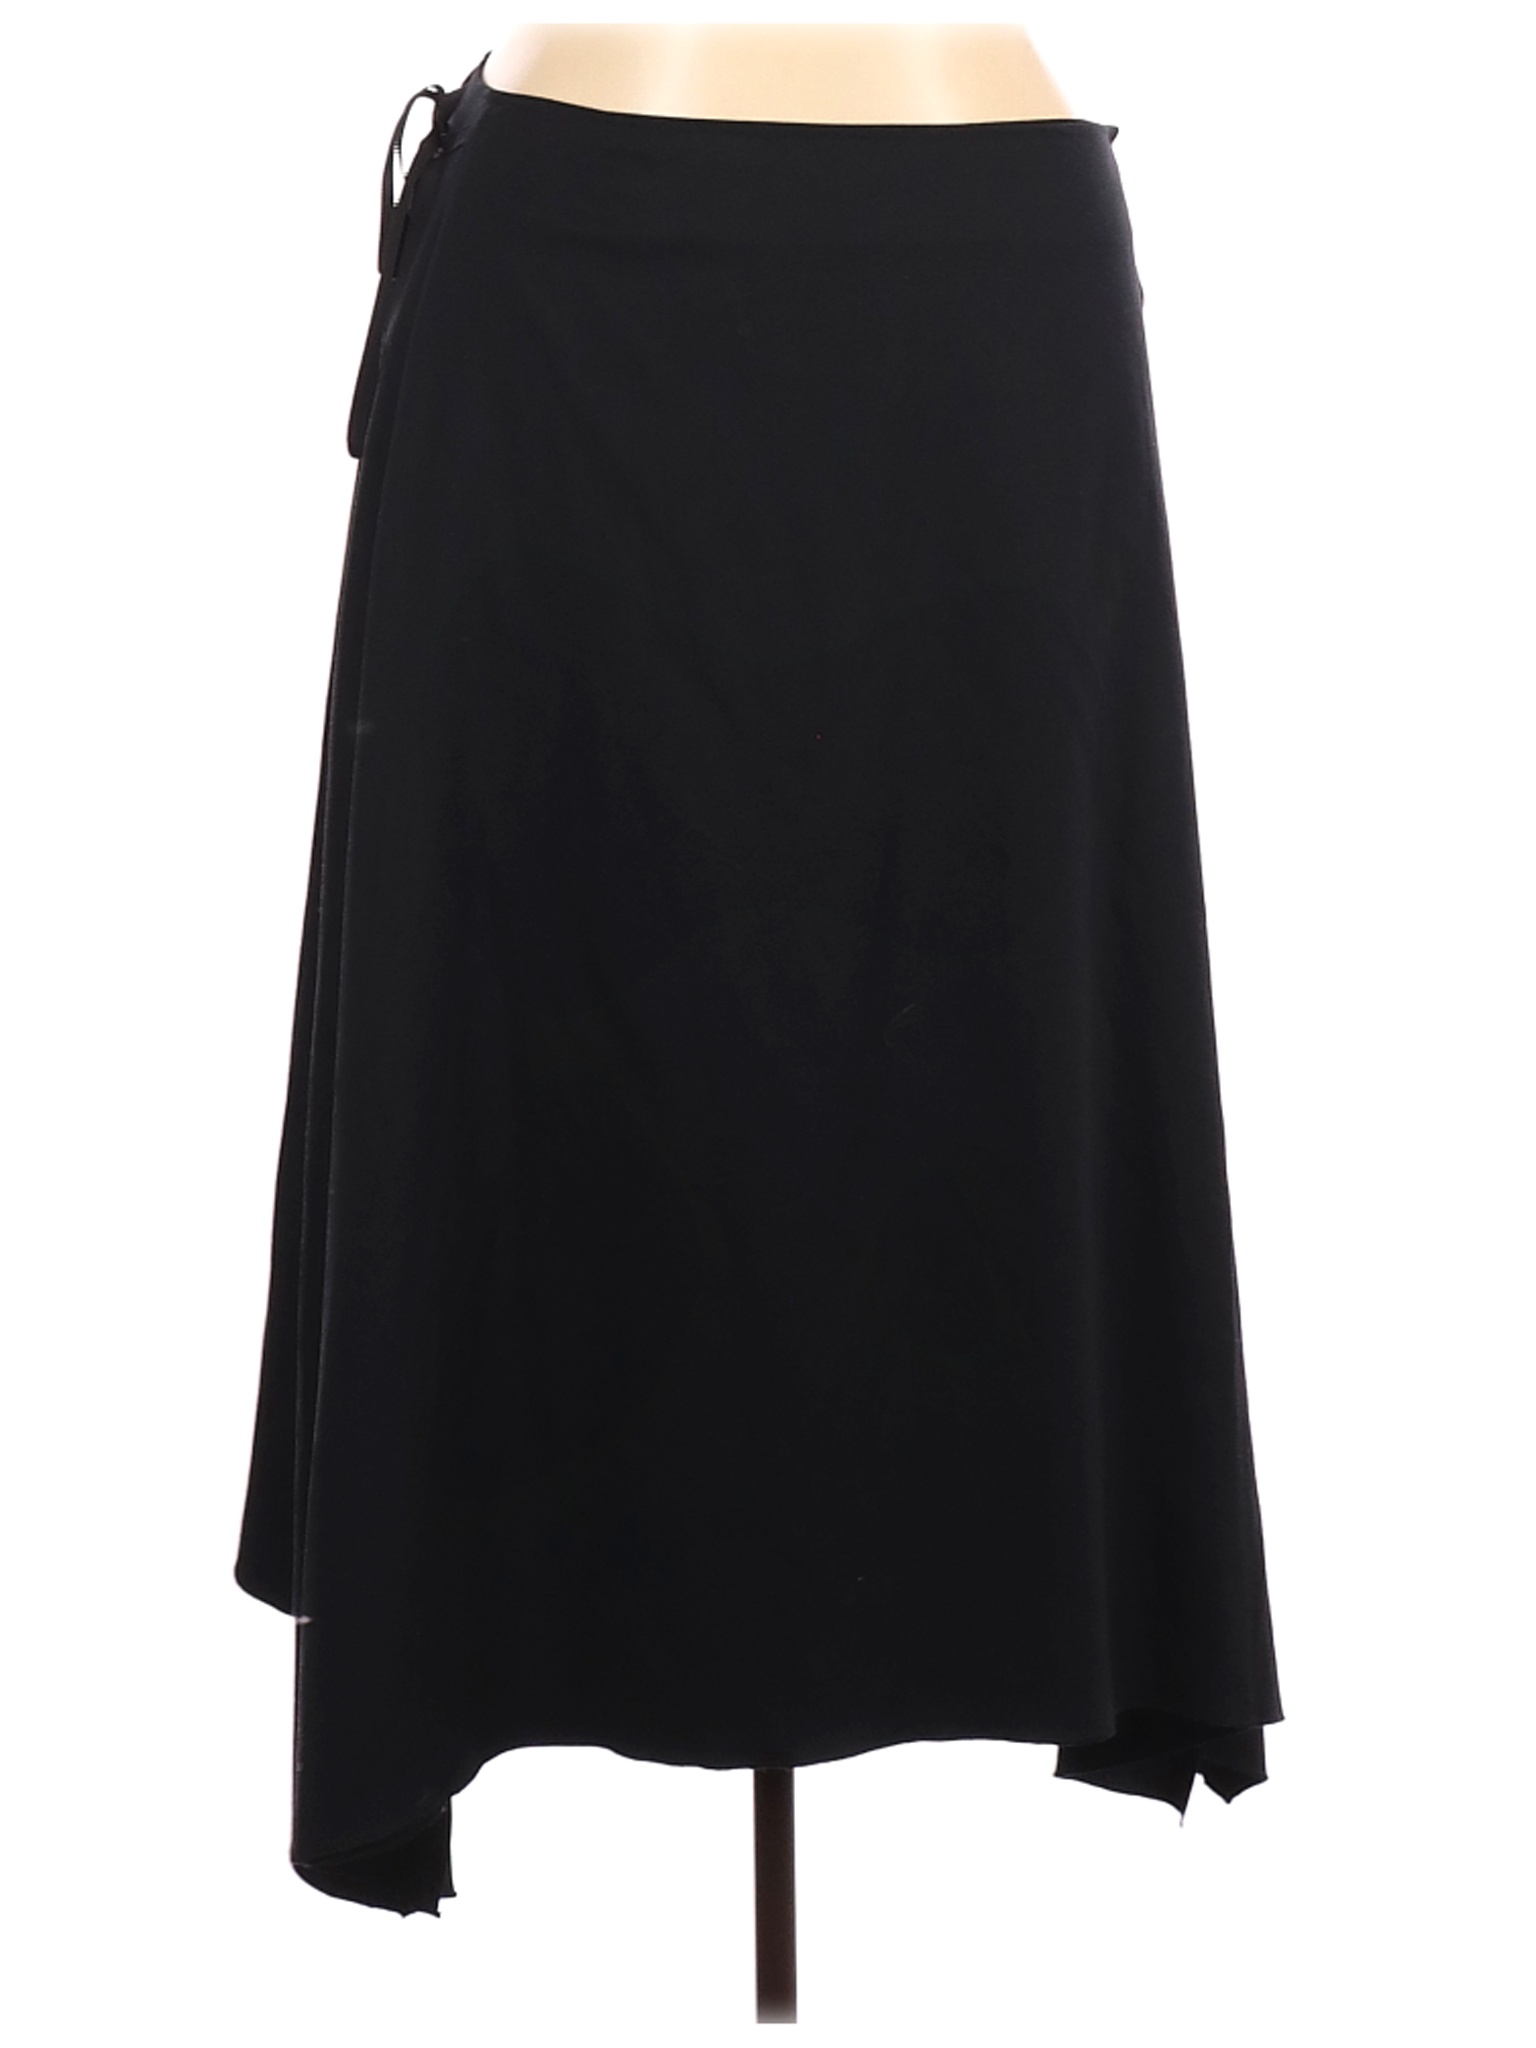 J.Jill Women Black Casual Skirt 16 | eBay